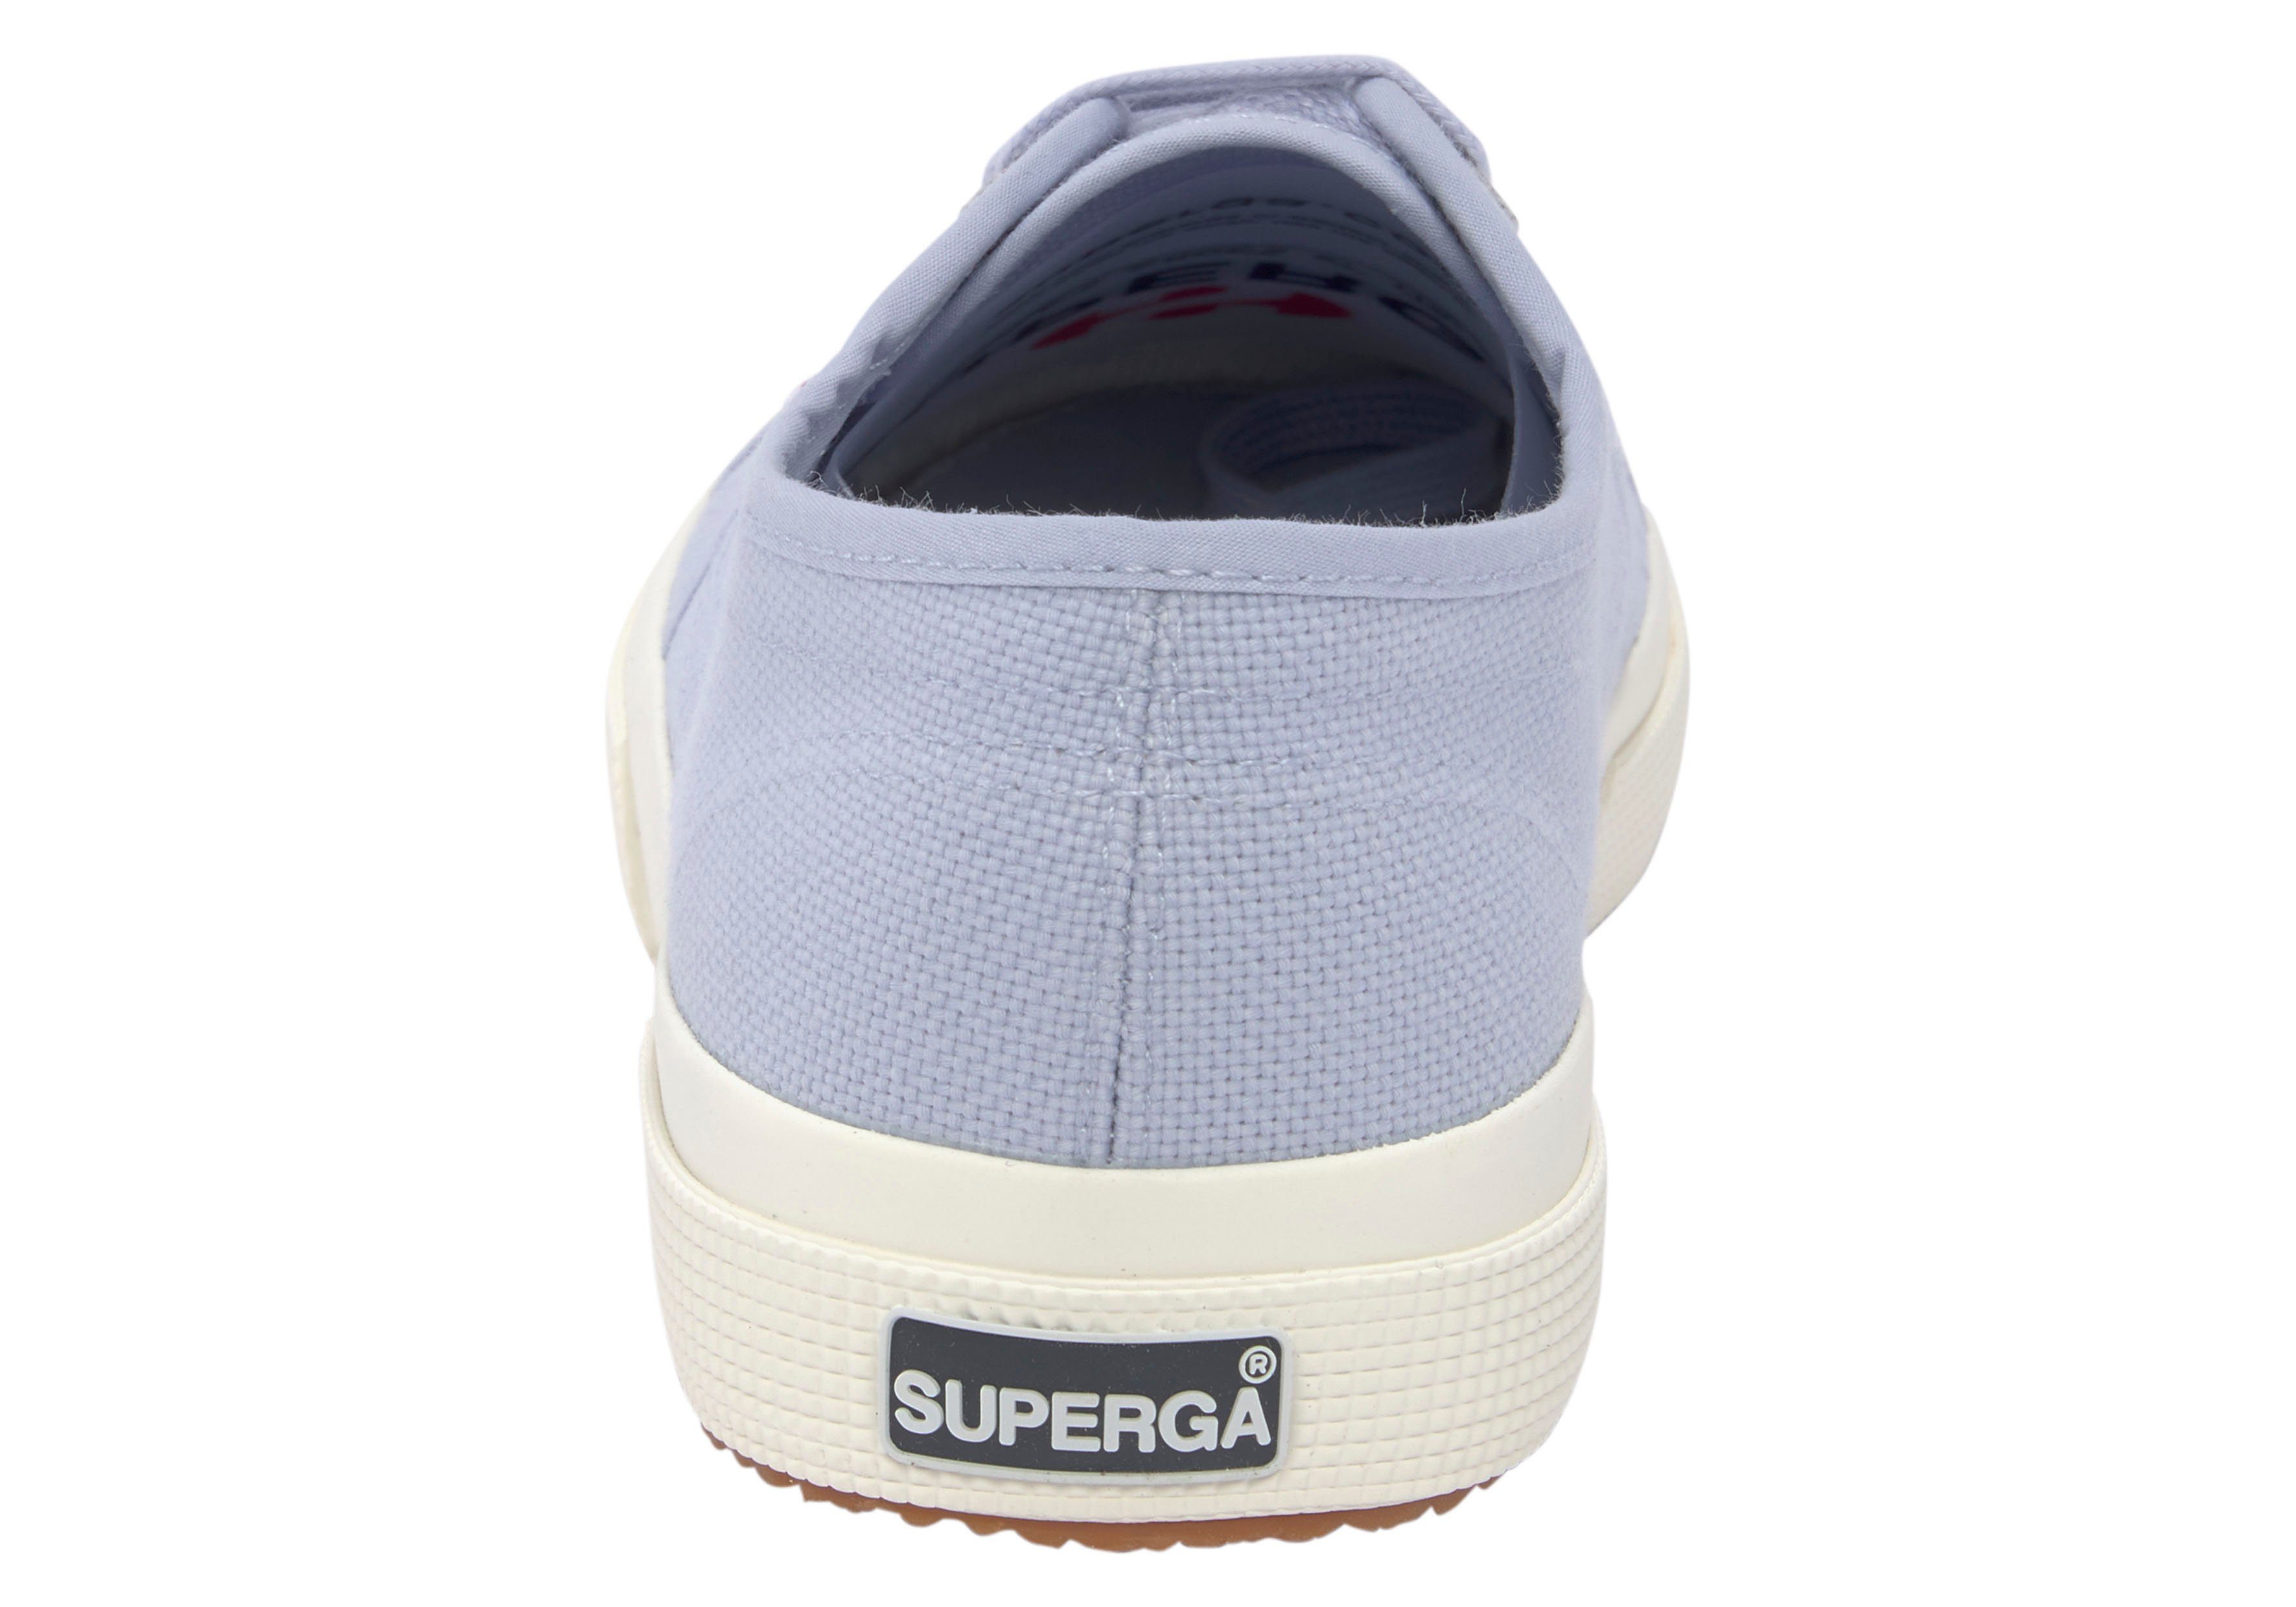 Superga Cotu Classic Sneaker Canvas-Obermaterial mit flieder klassischem